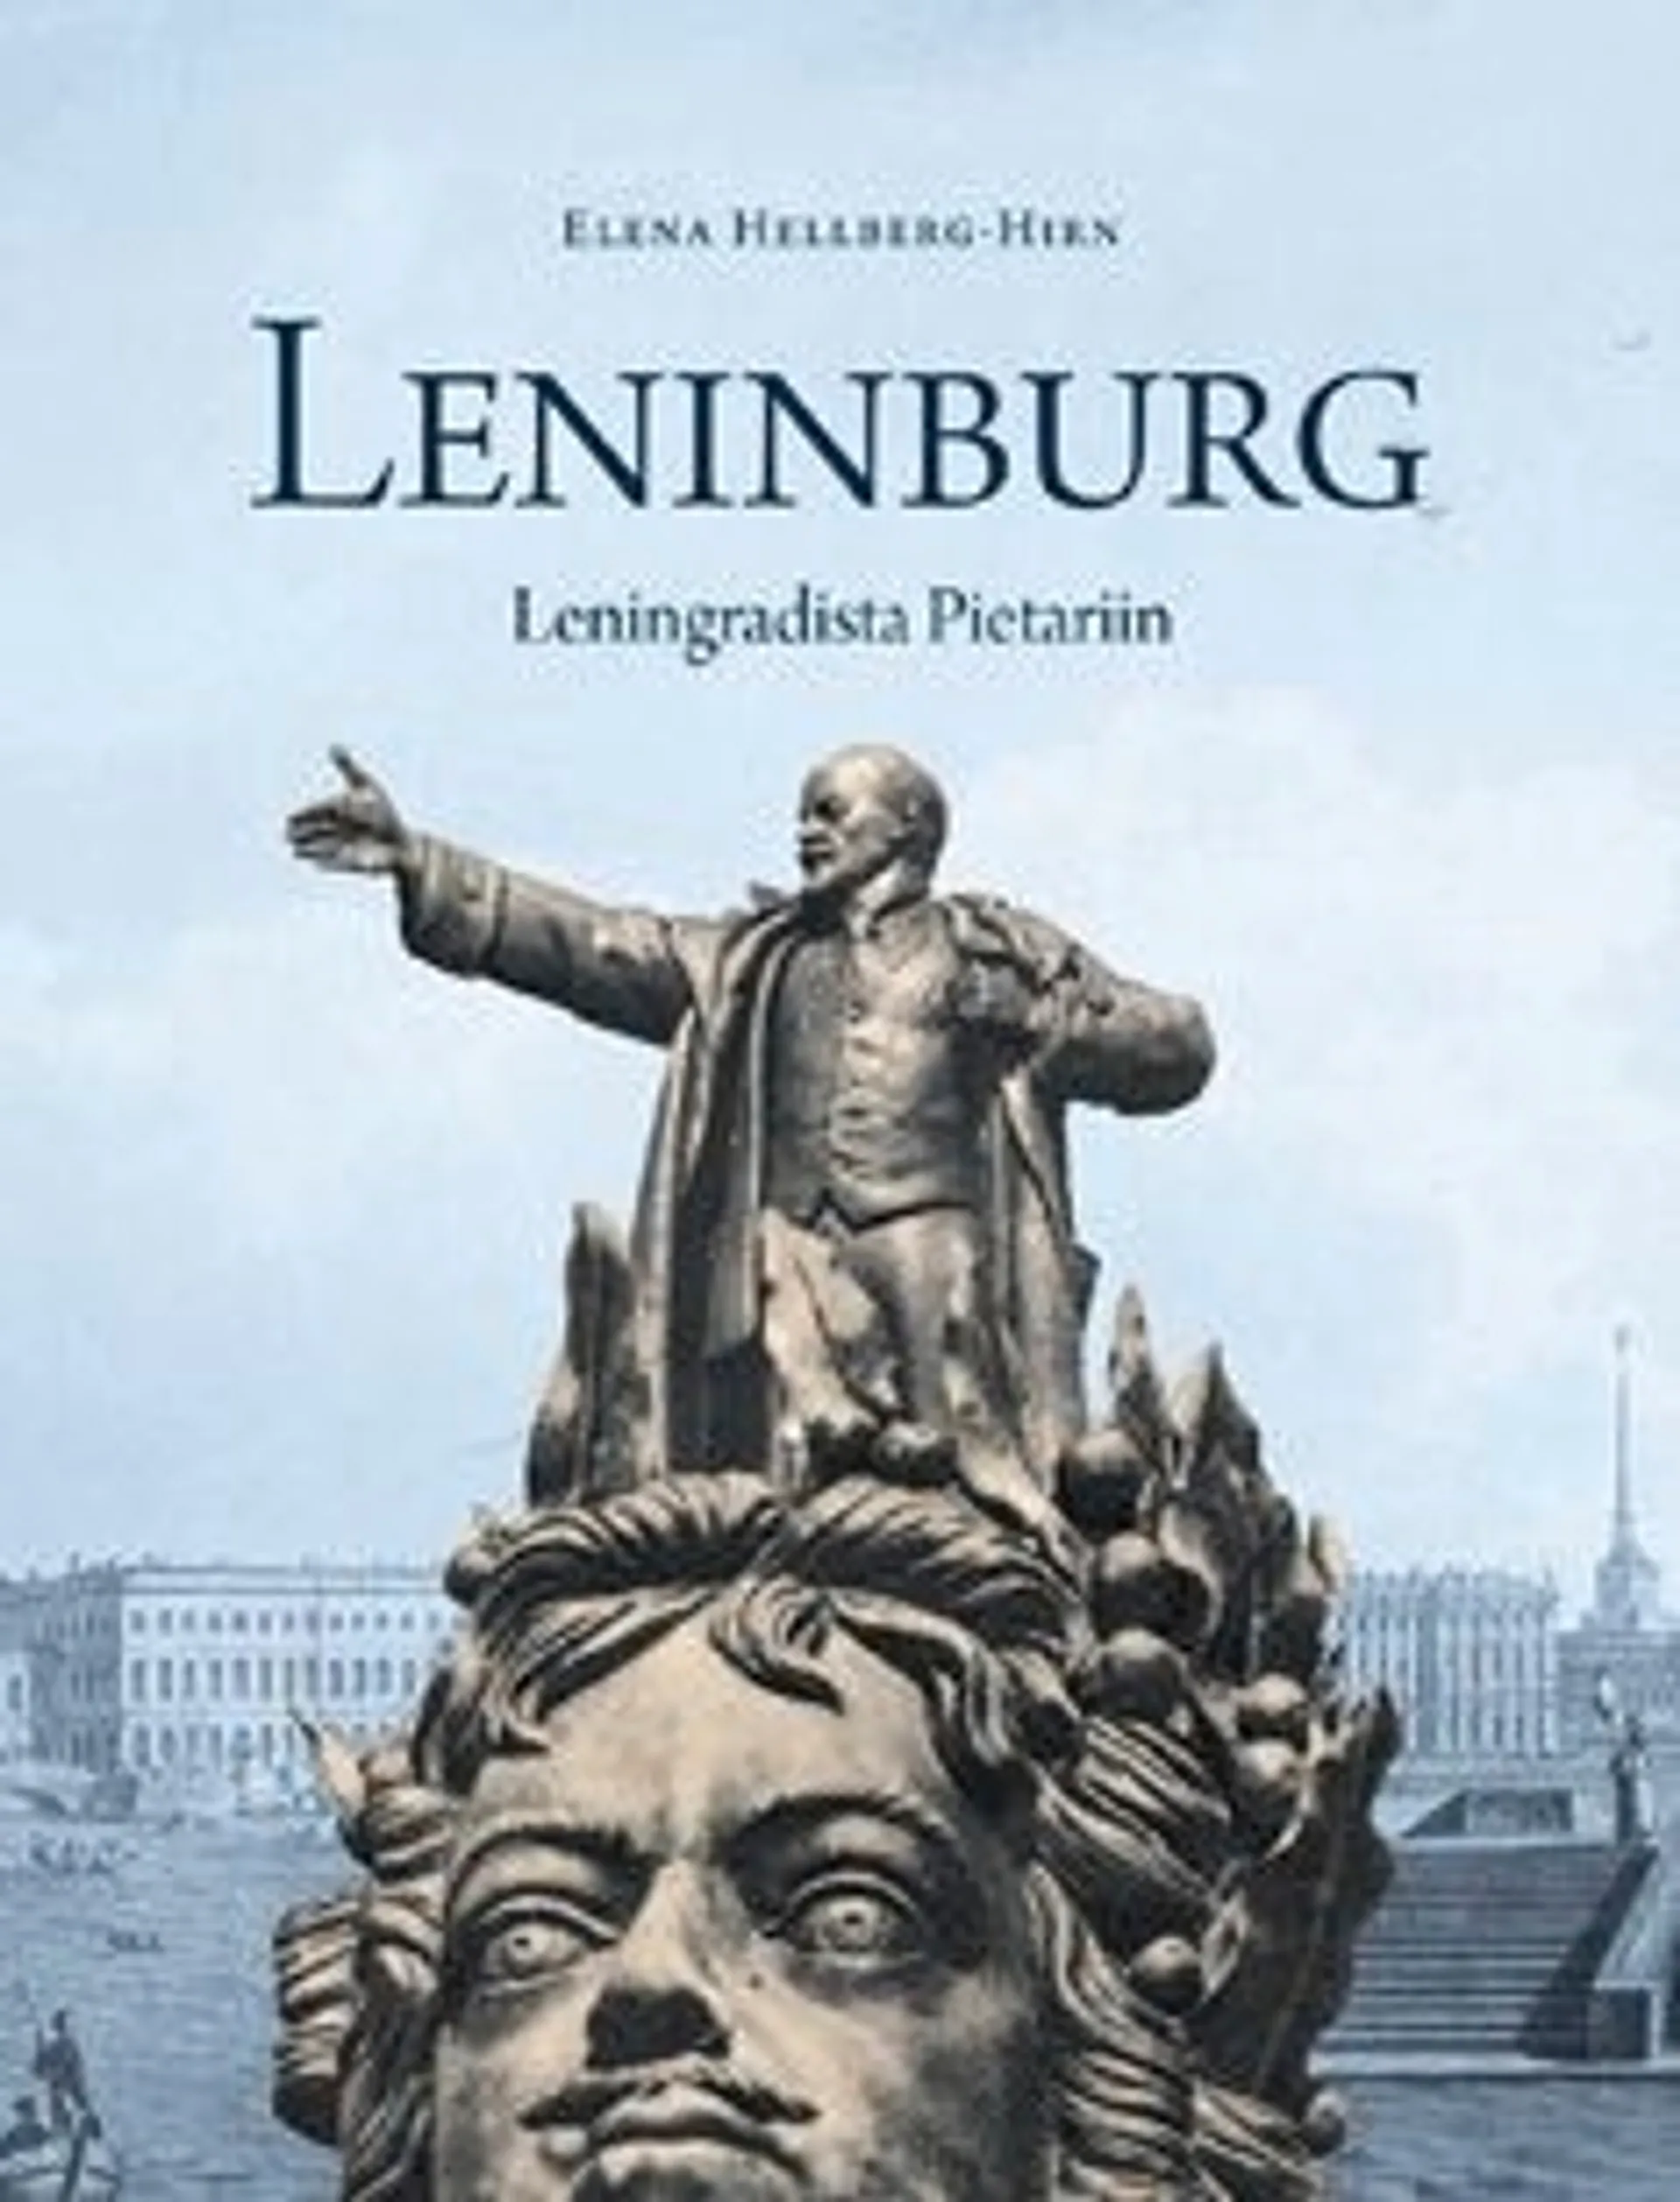 Hellberg-Hirn, Leninburg